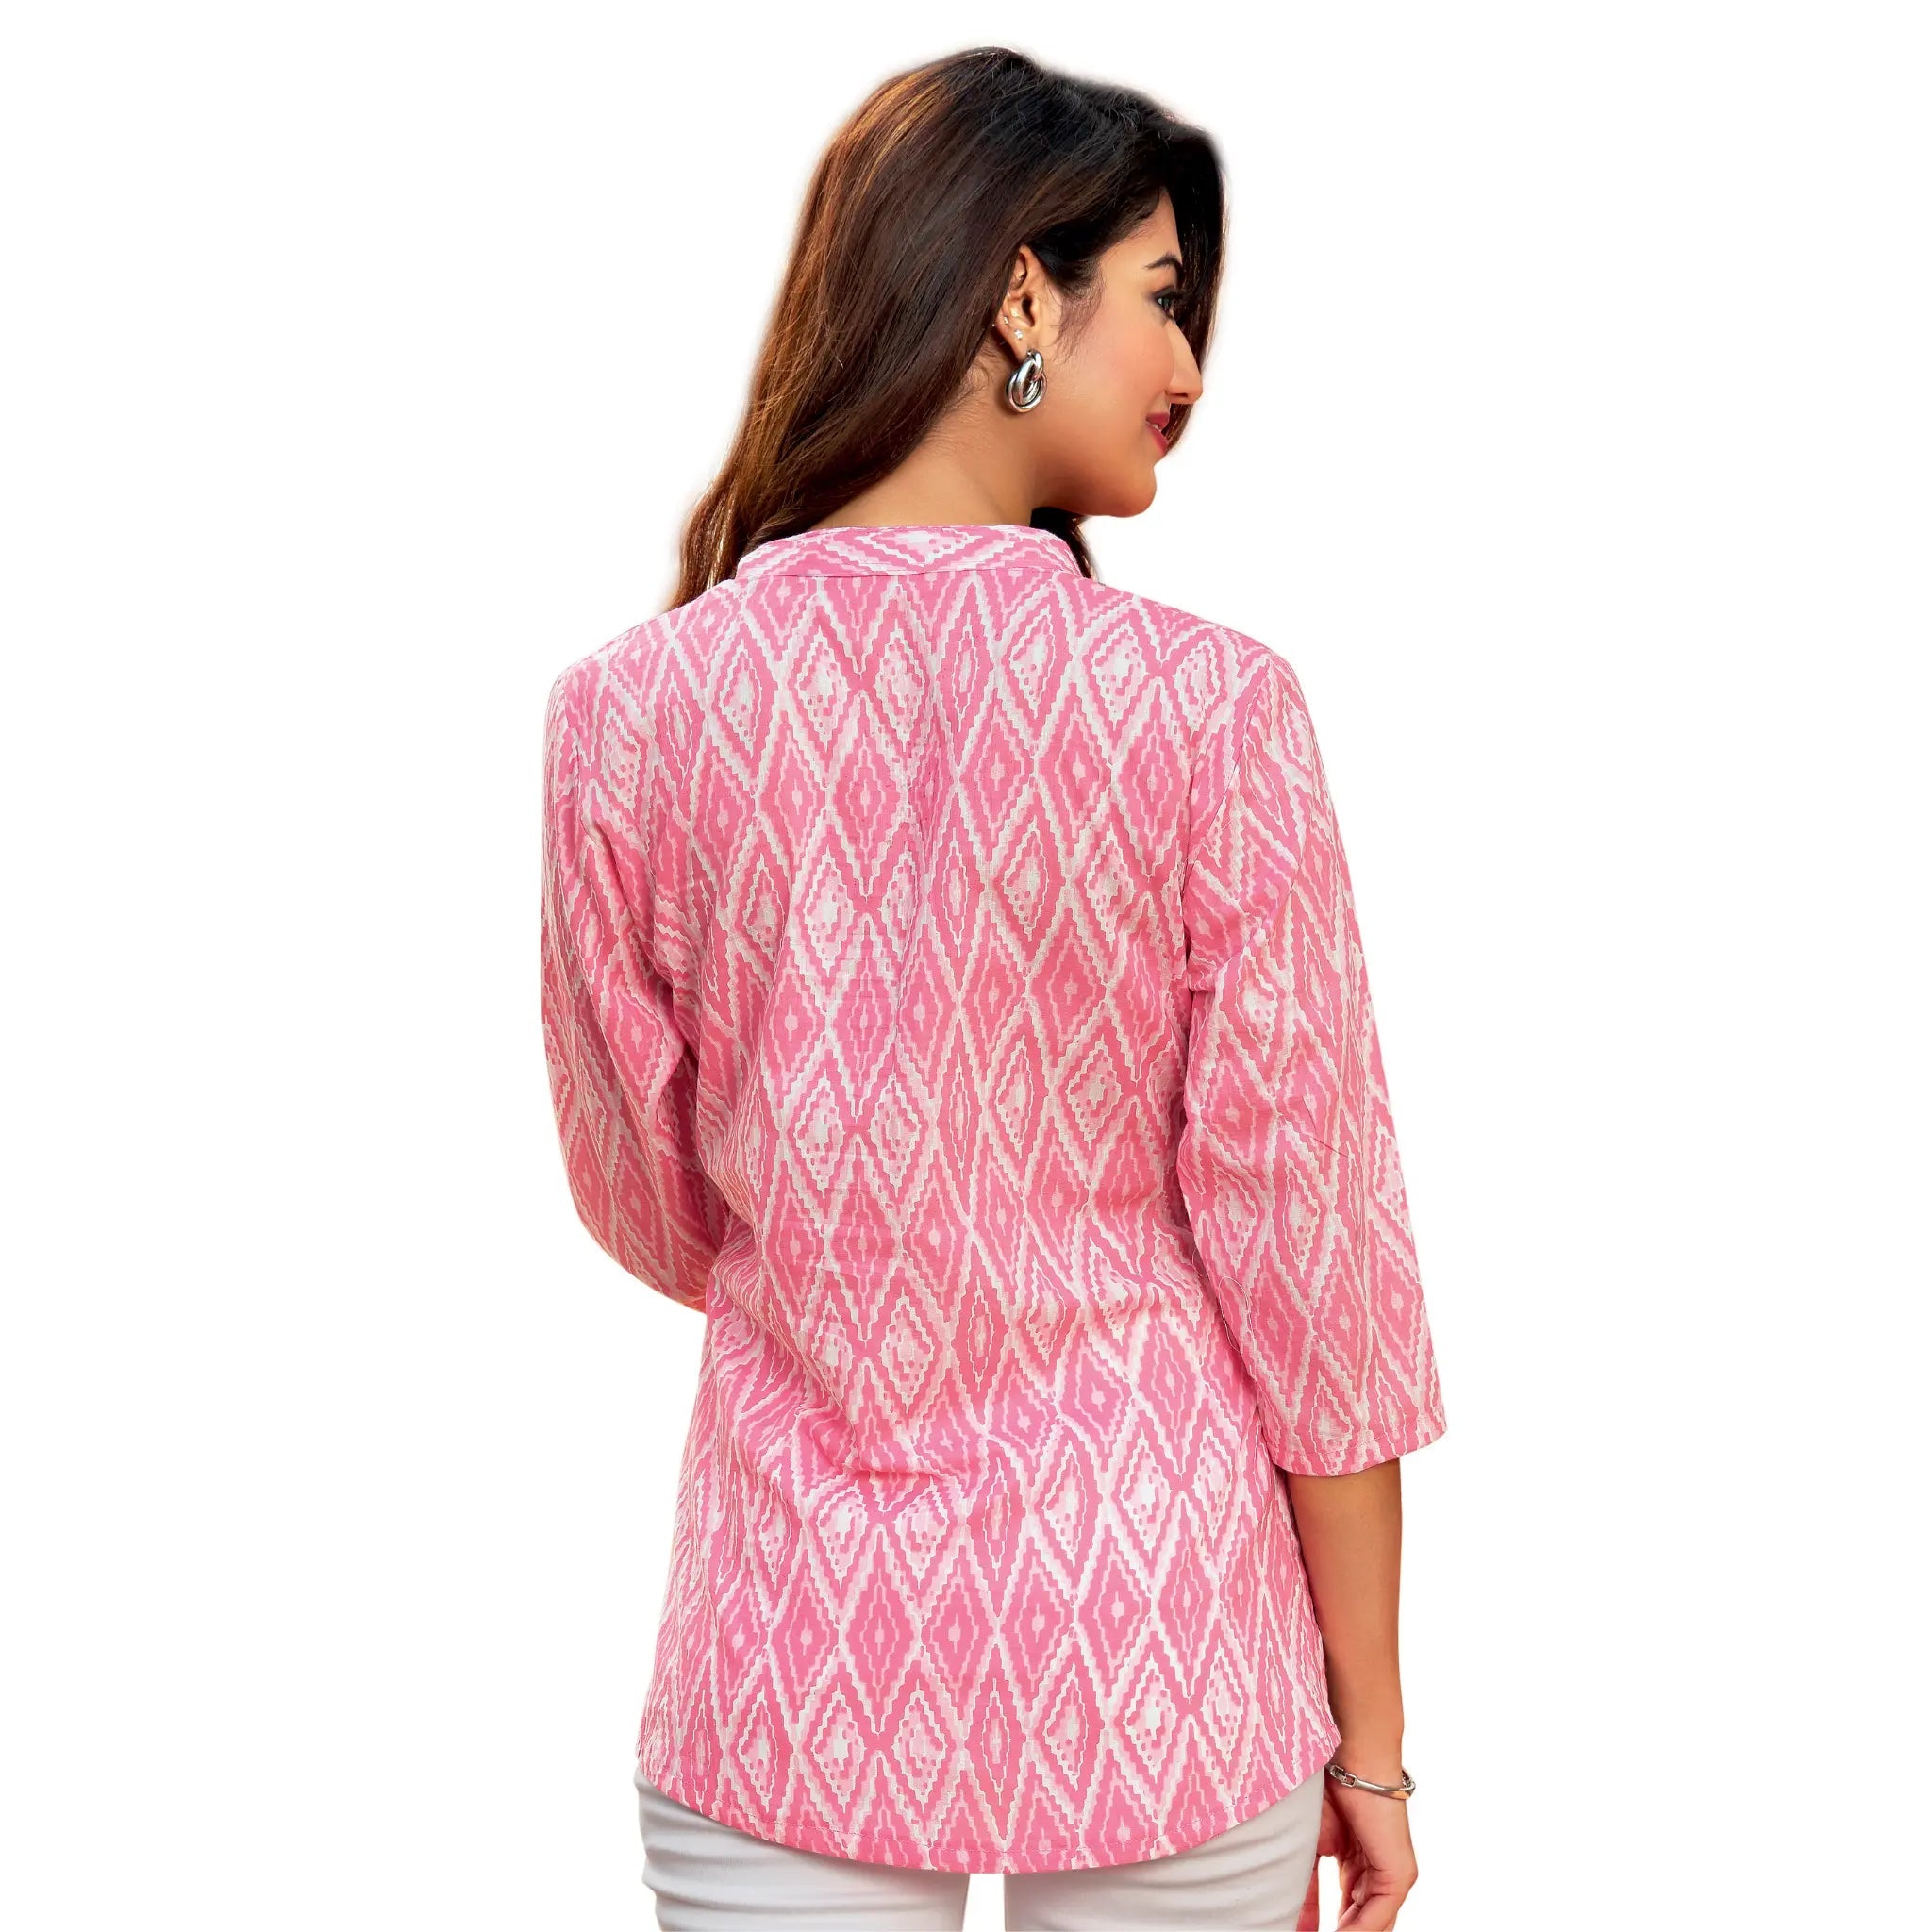 Rose Pink Mandarin Collar Cotton Short Tops for Women